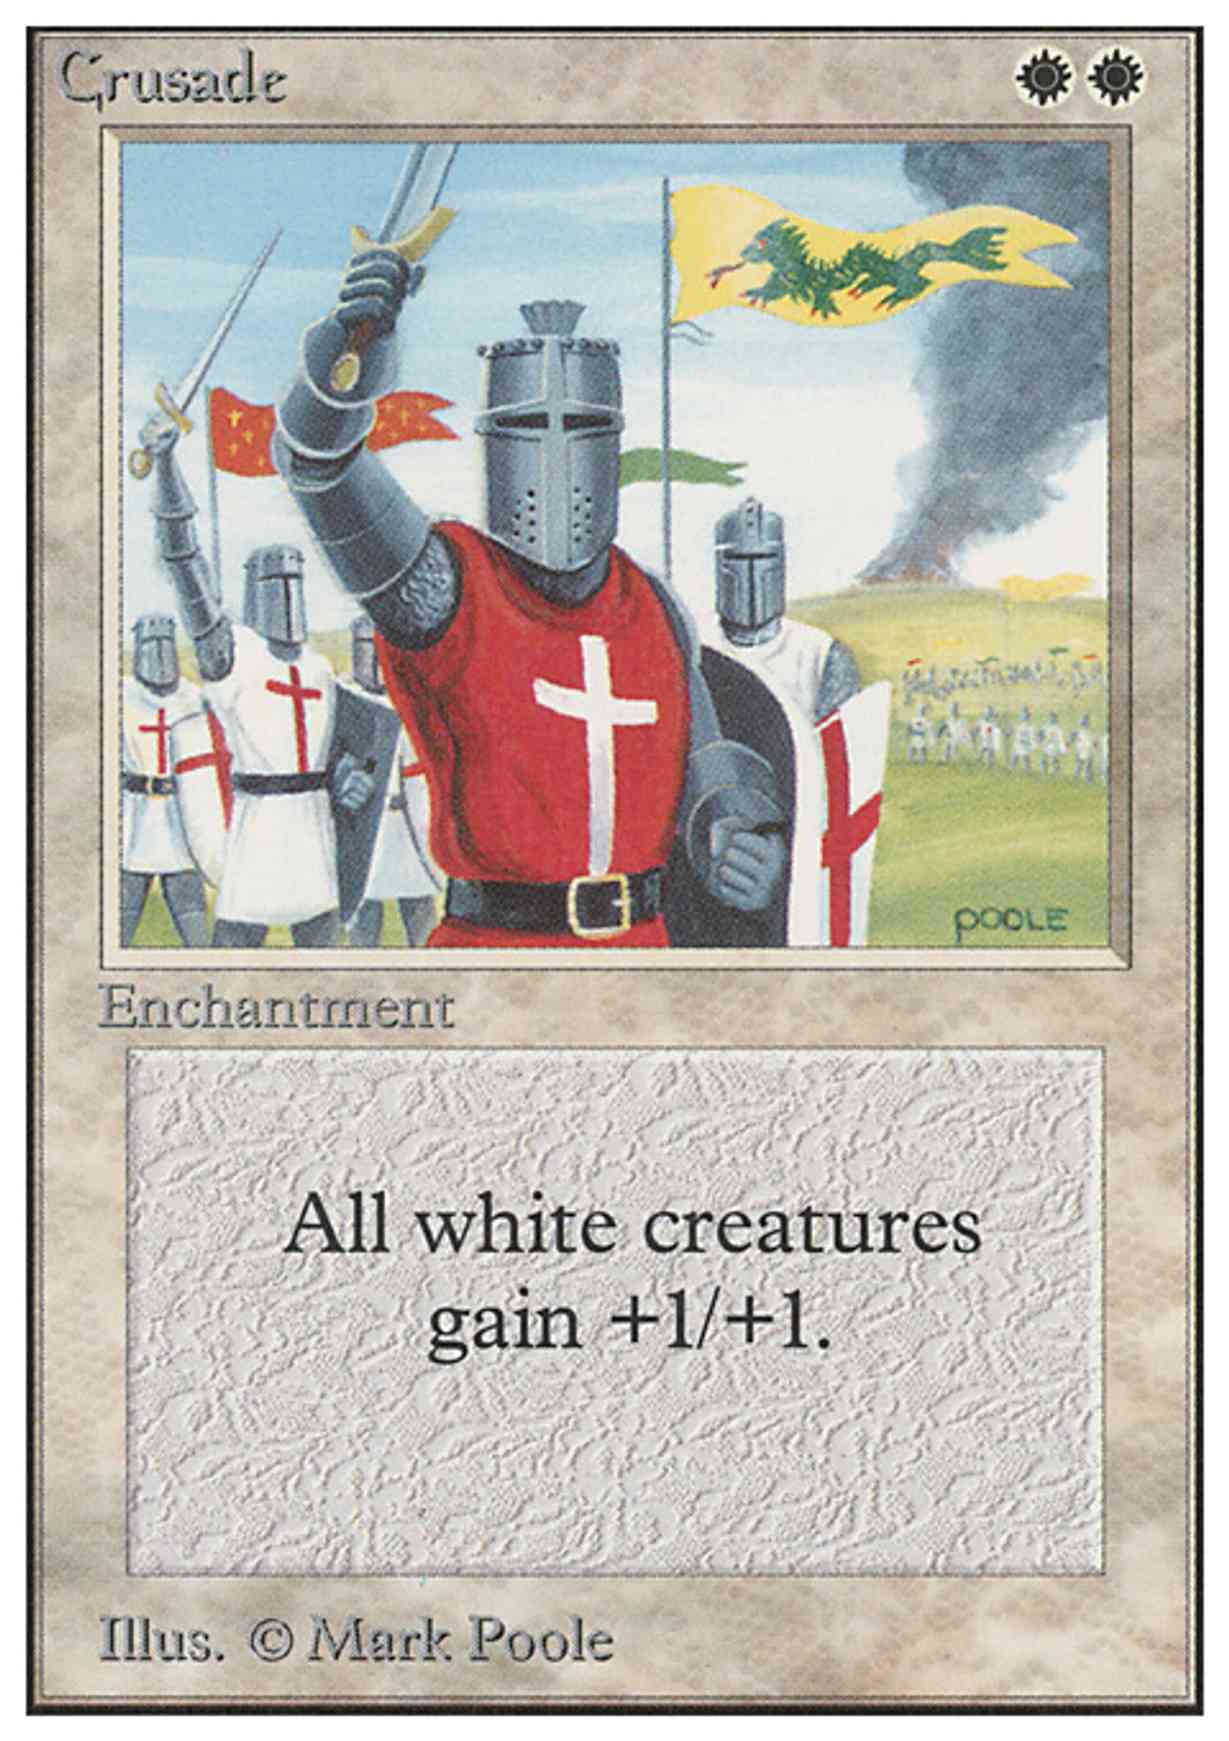 Crusade magic card front